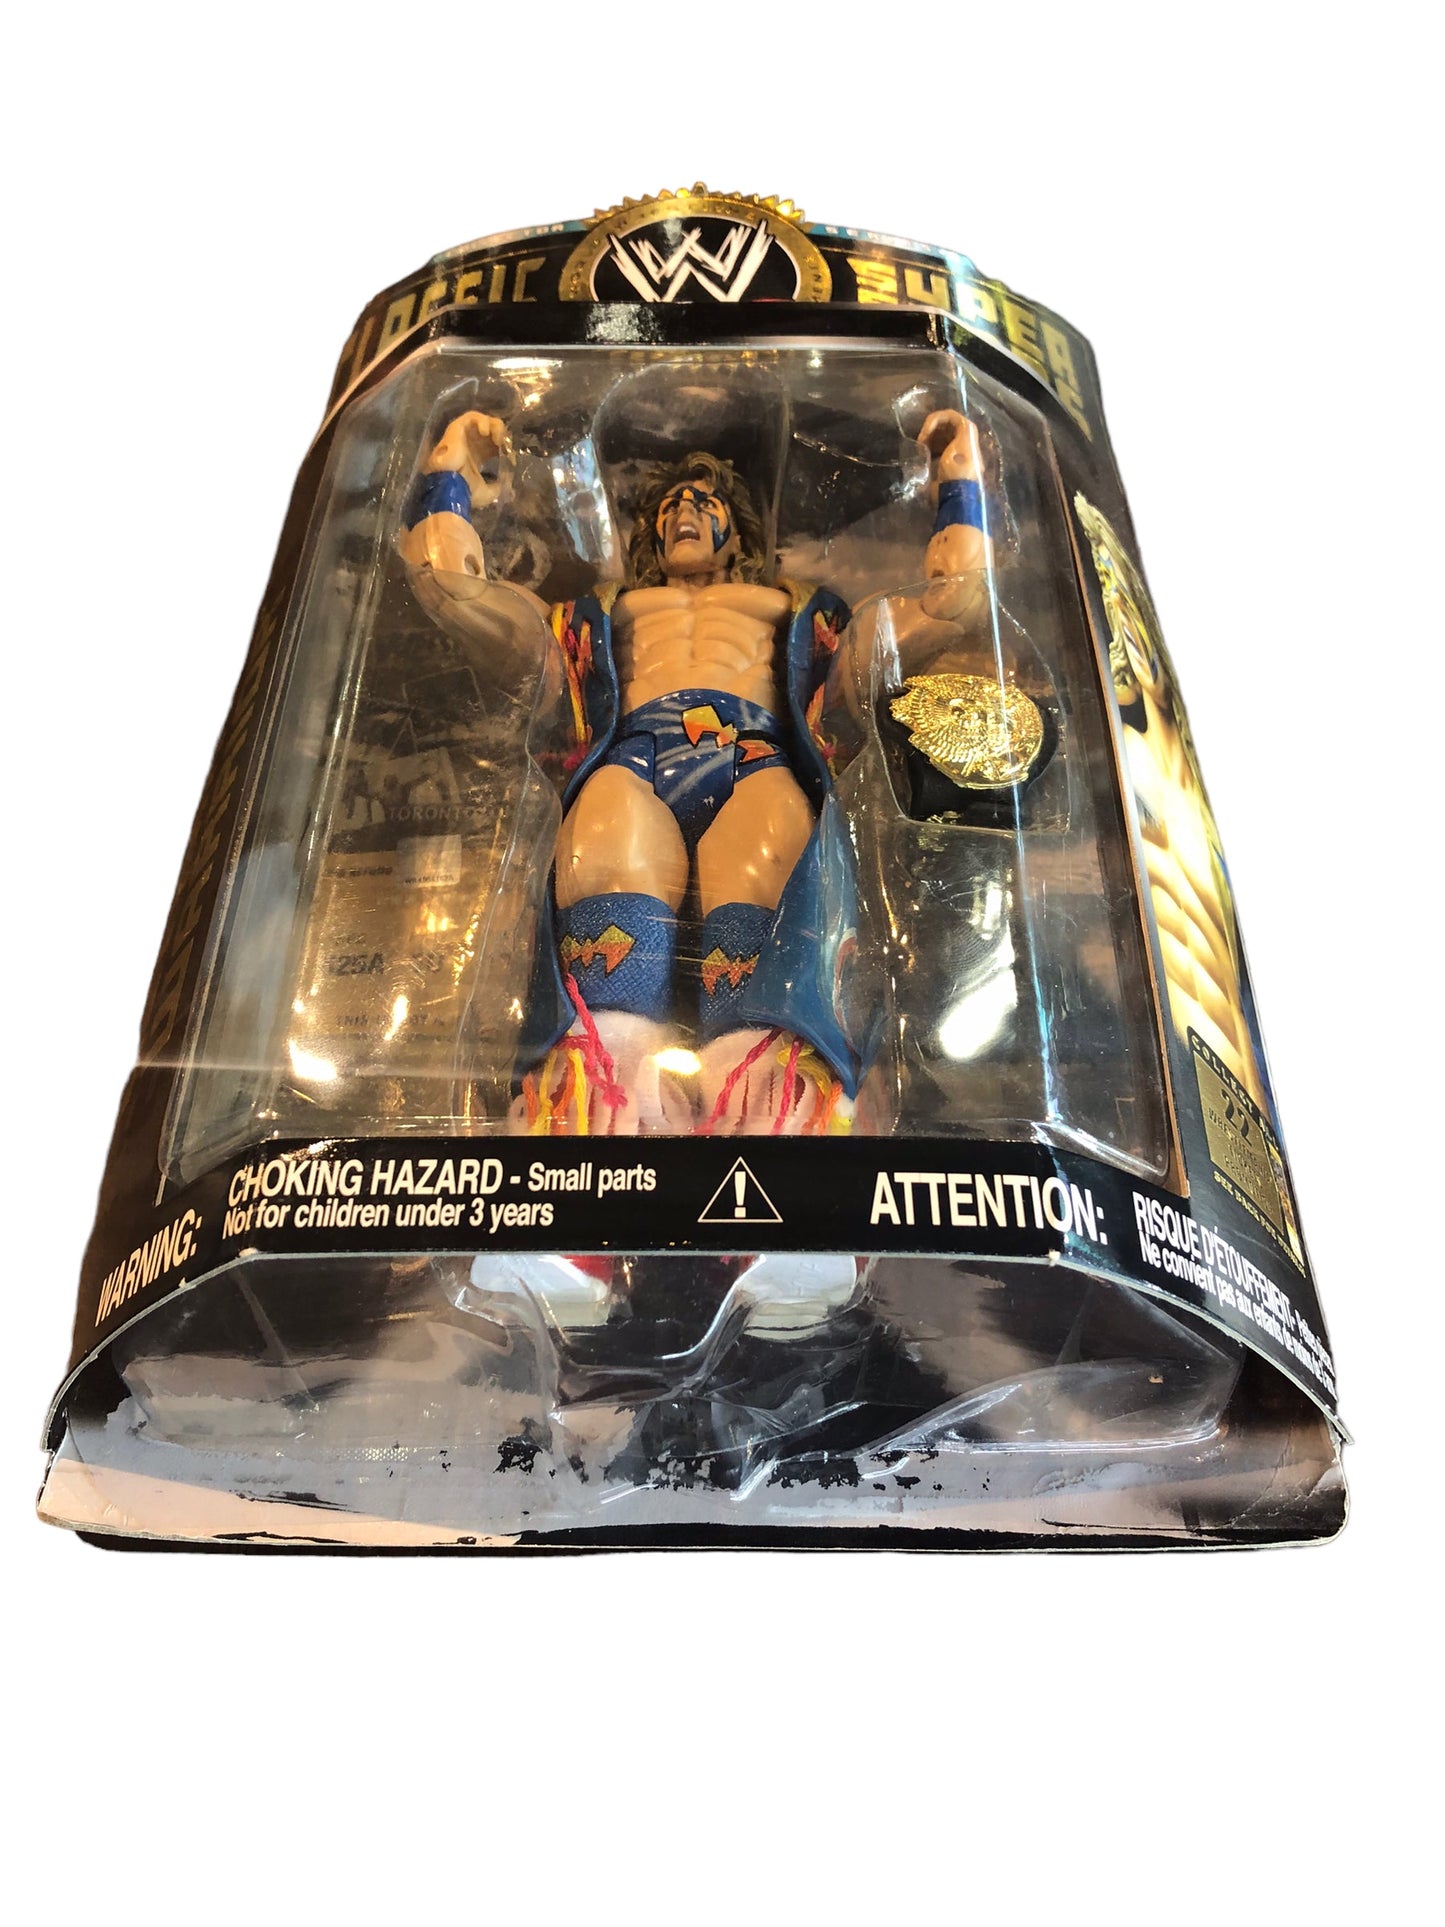 The Ultimate Warrior WWE Classic Super Stars Collector Series #12 Jakks 2006